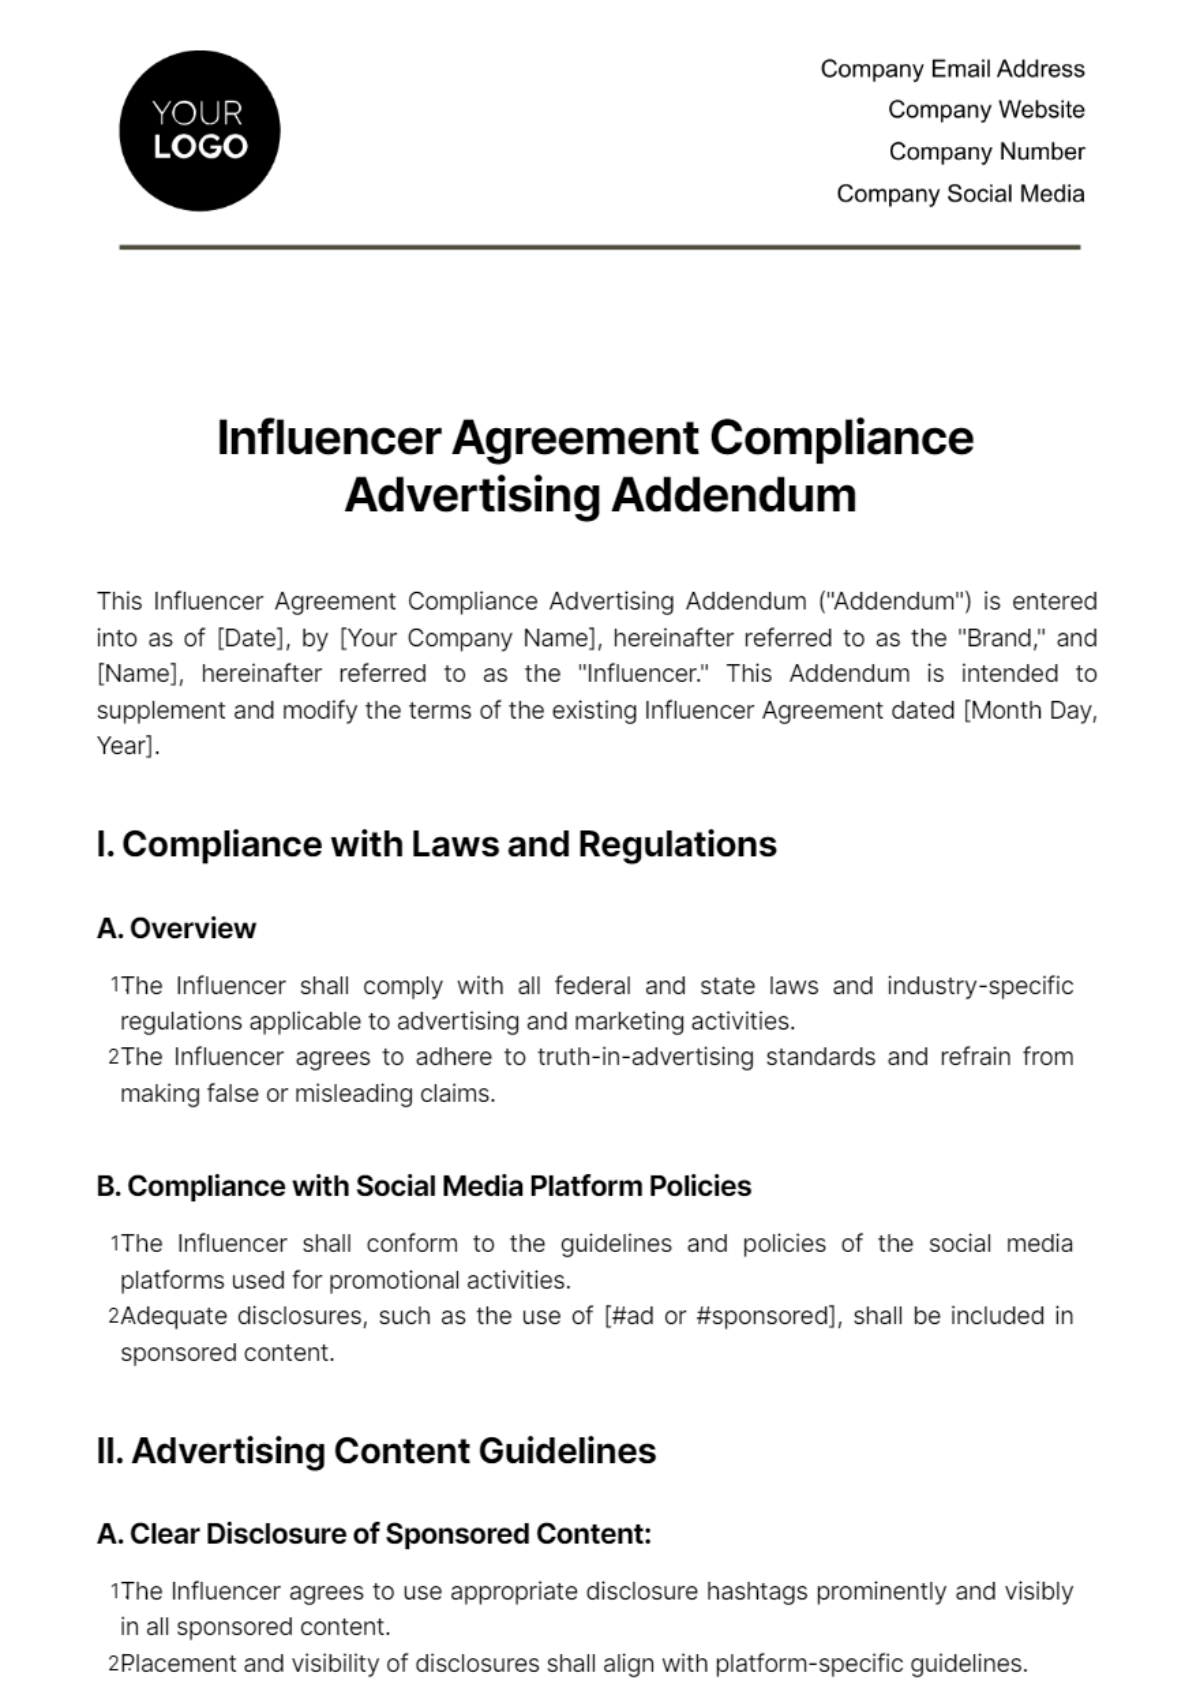 Free Influencer Agreement Compliance Advertising Addendum Template